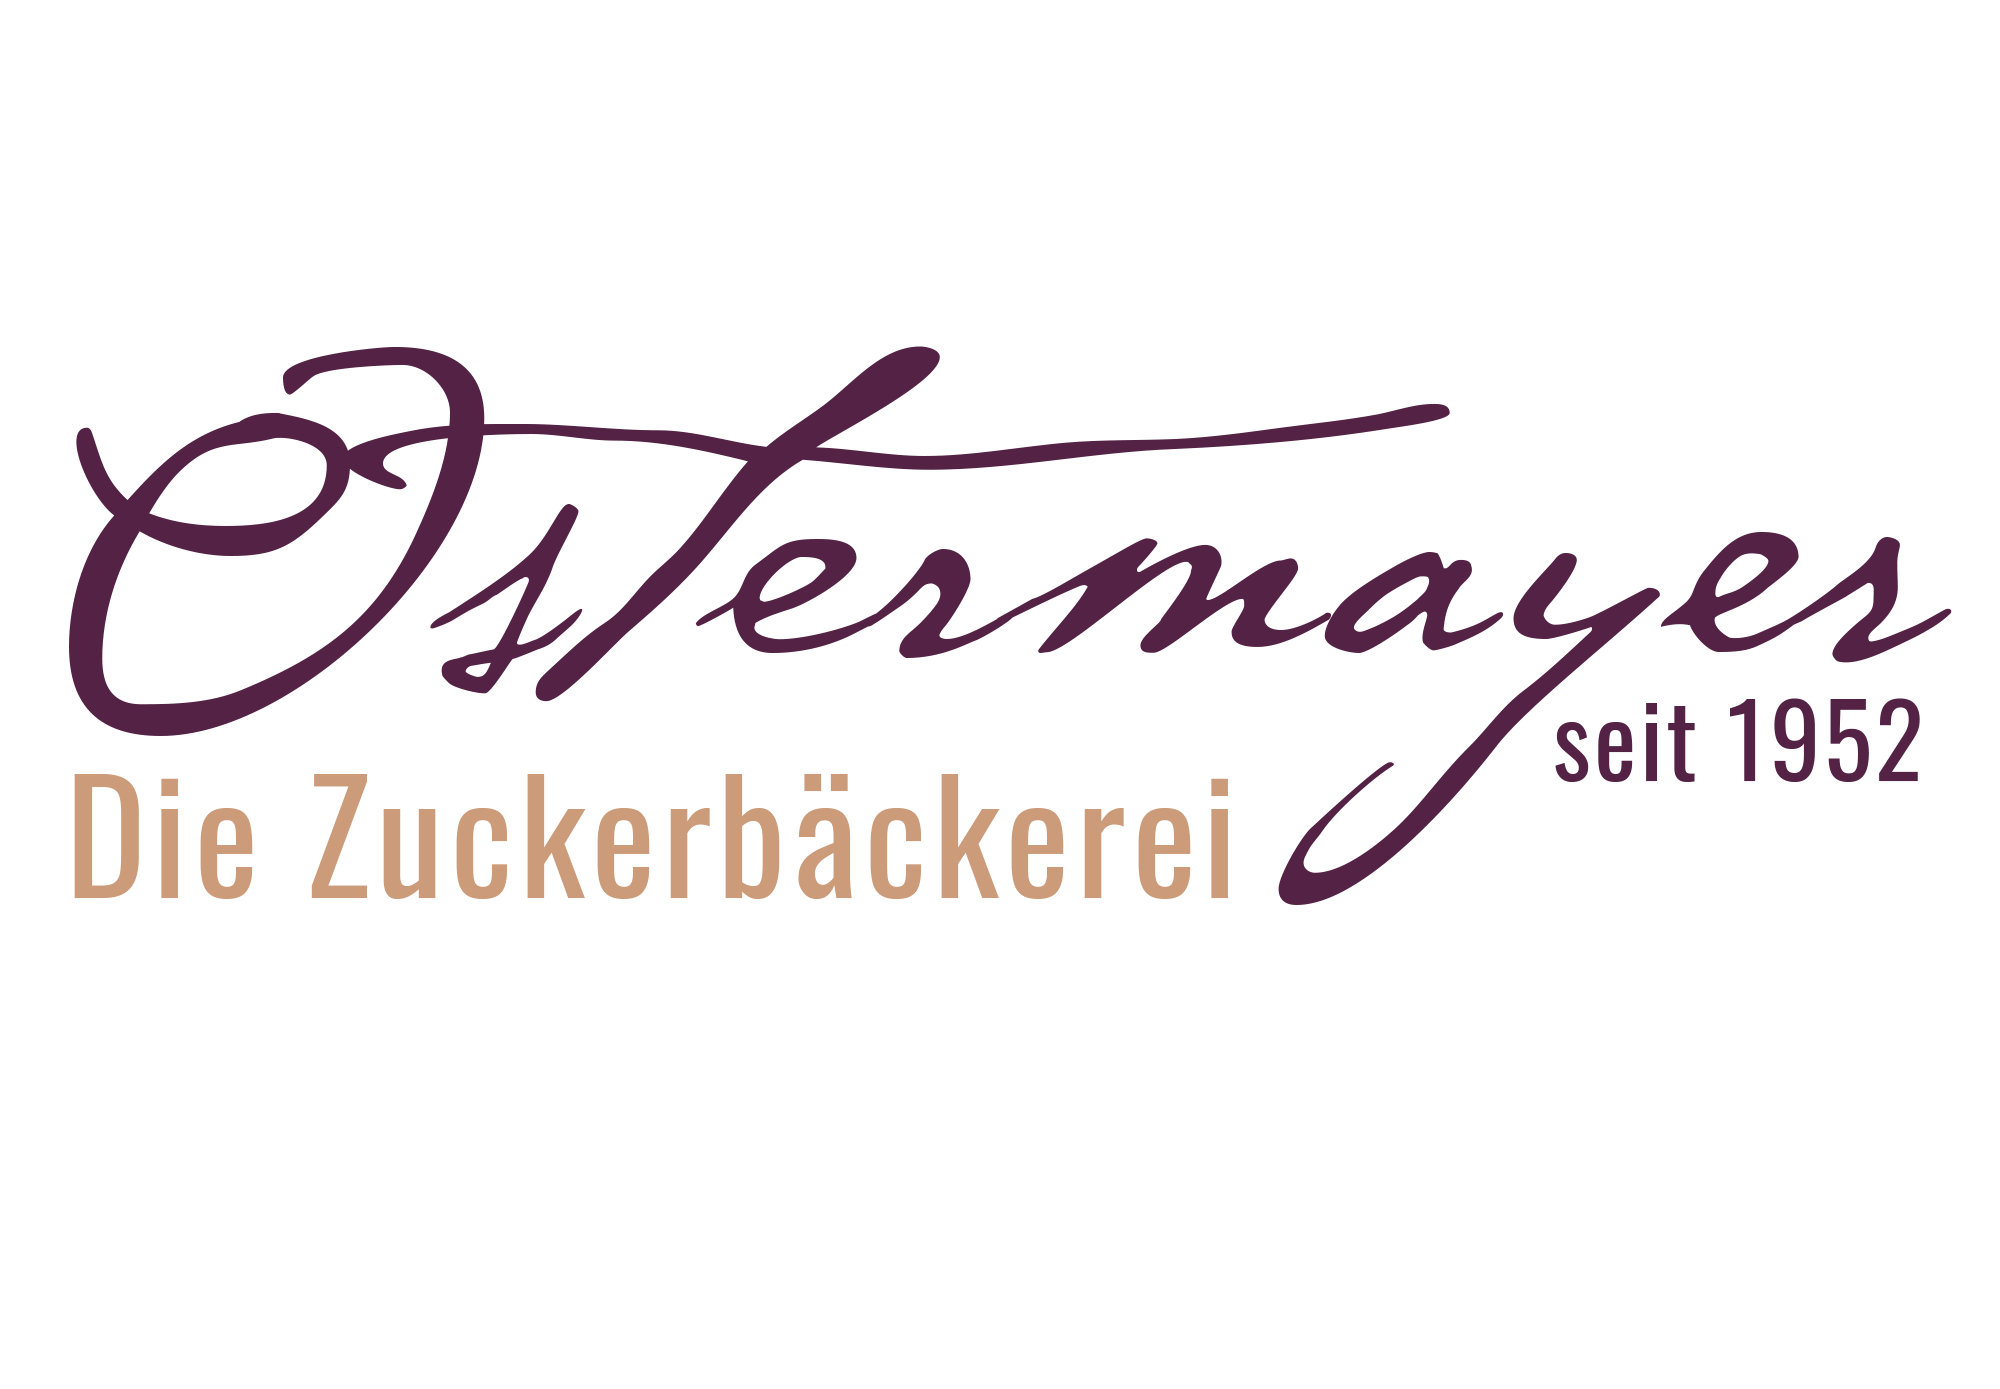 Ostermayer - Logo - Giefing web | media